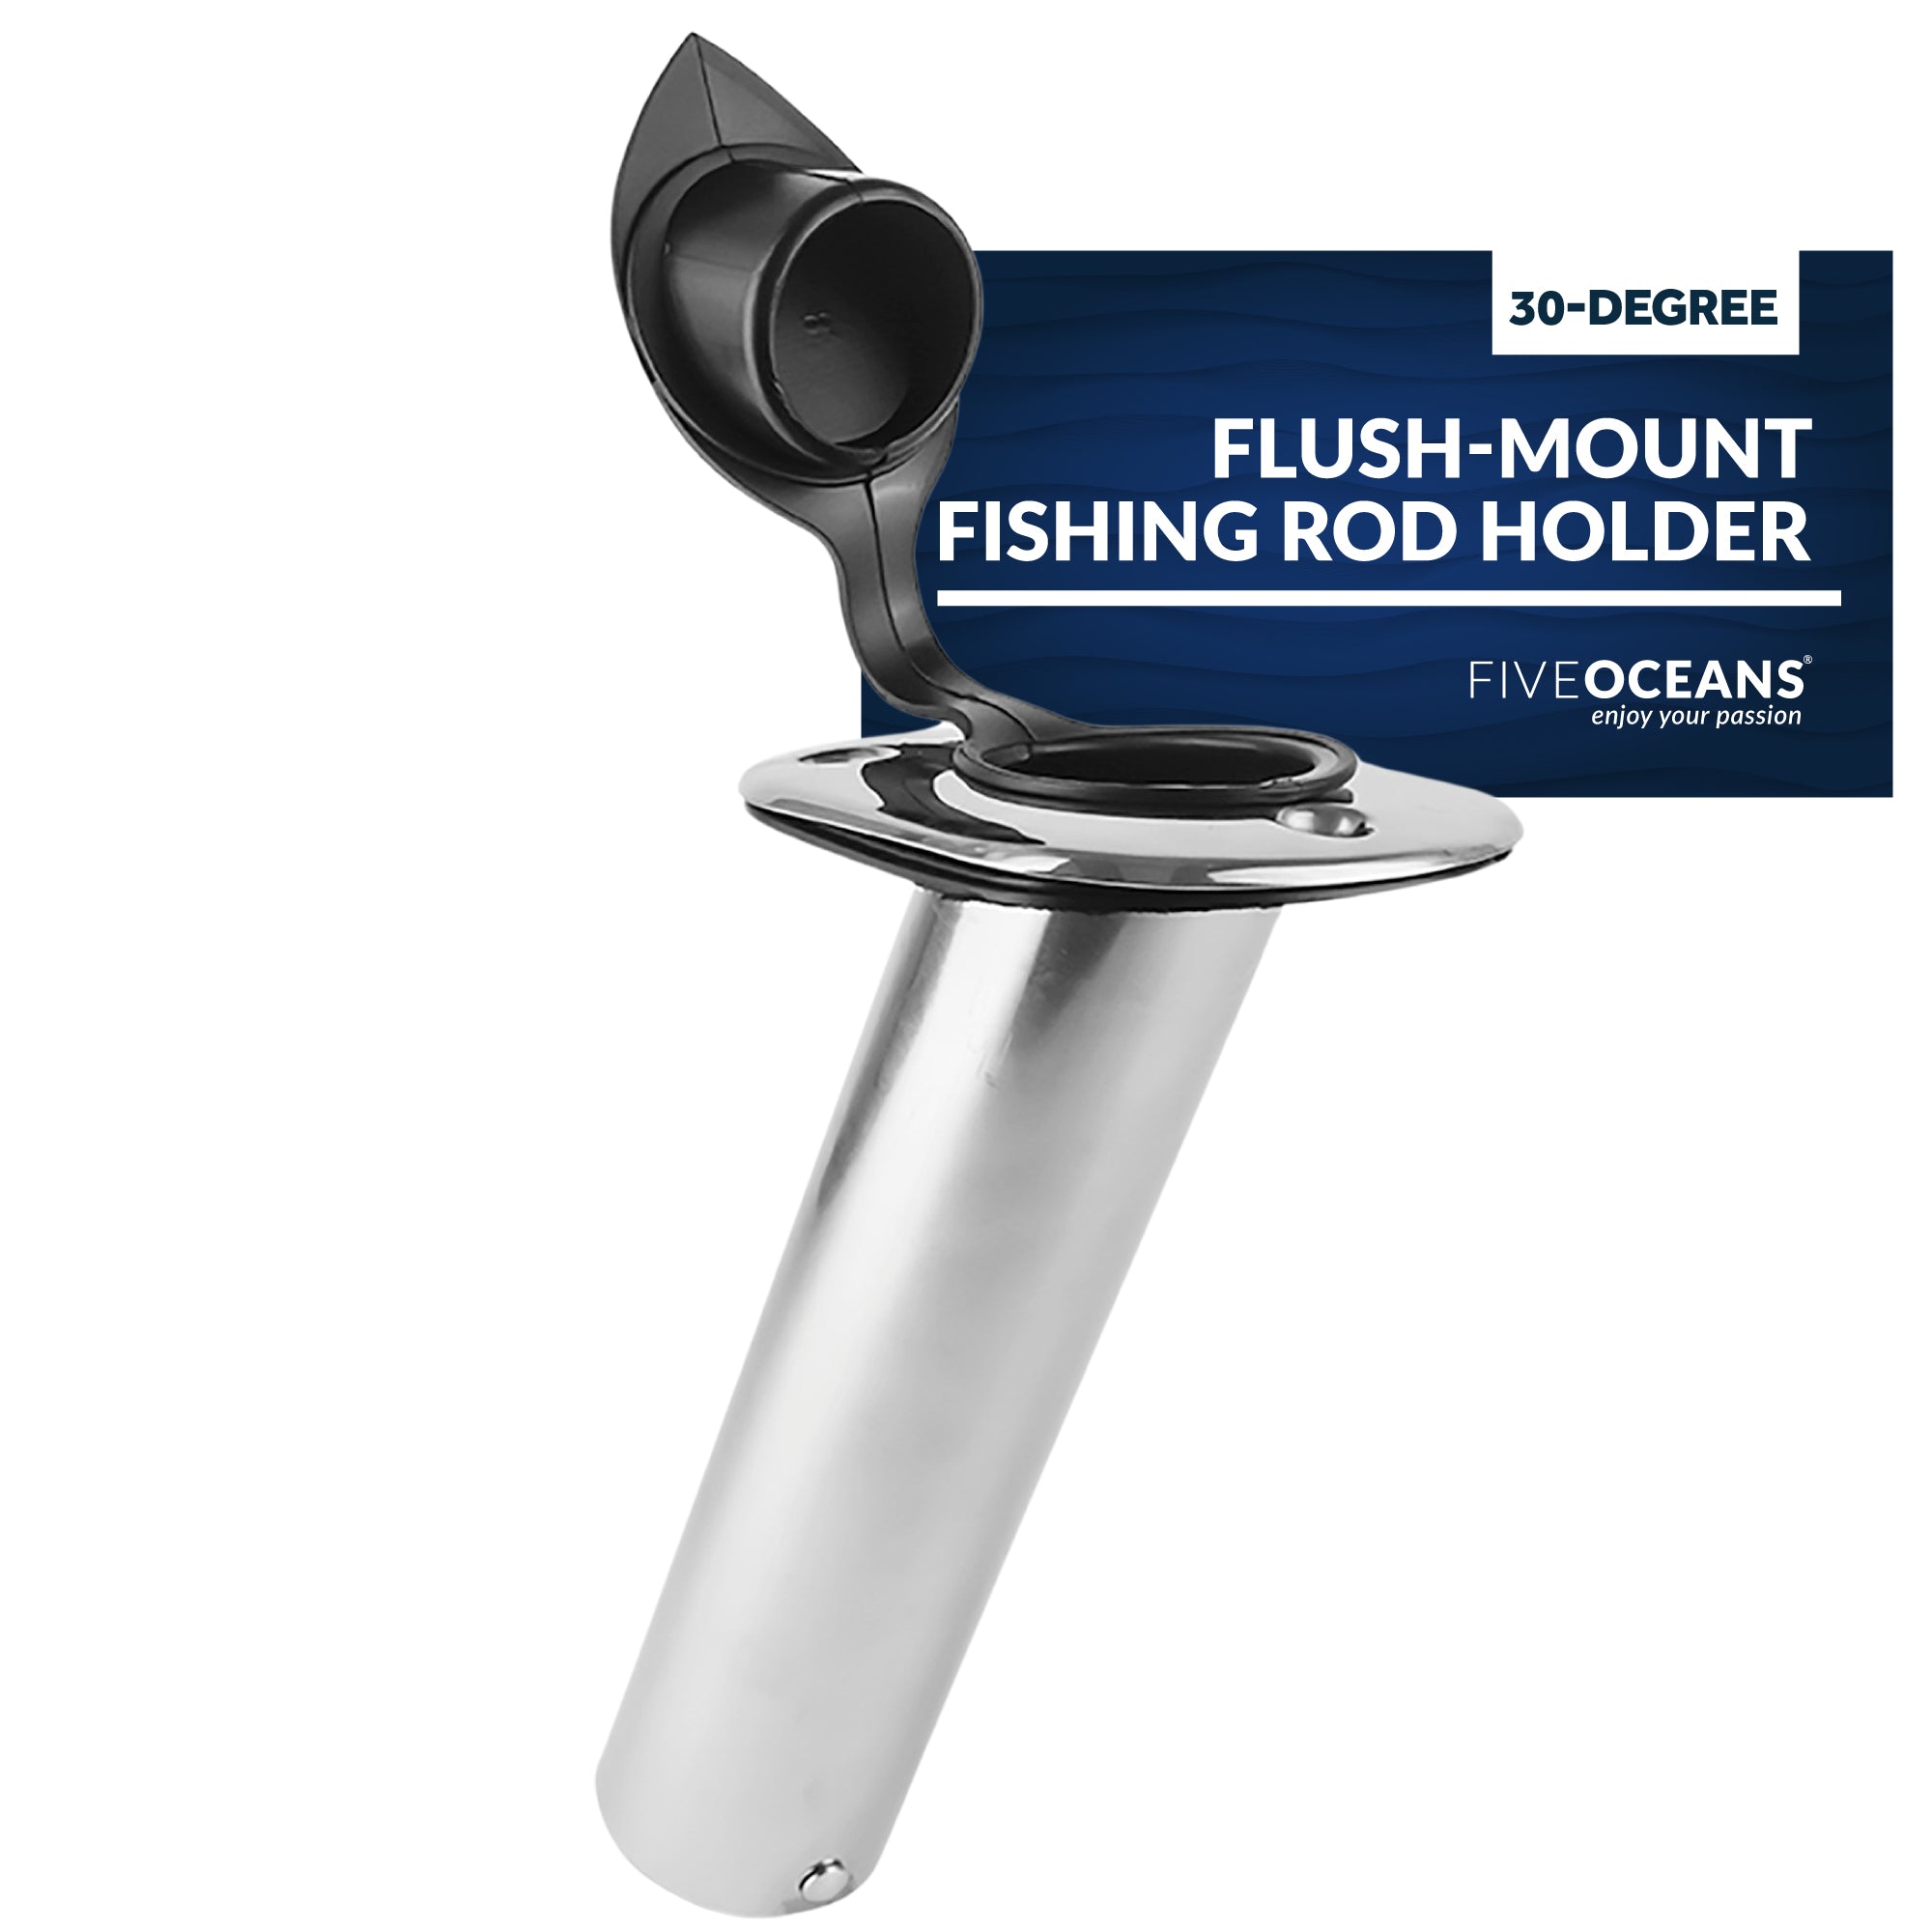 Stainless Steel Flush-Mount Fishing Rod Holder, 30-Degree Top Flange, PVC Inside Tube w/ Flip-up Cap and Gasket, Open End Base, 1-Pack, FO-4497